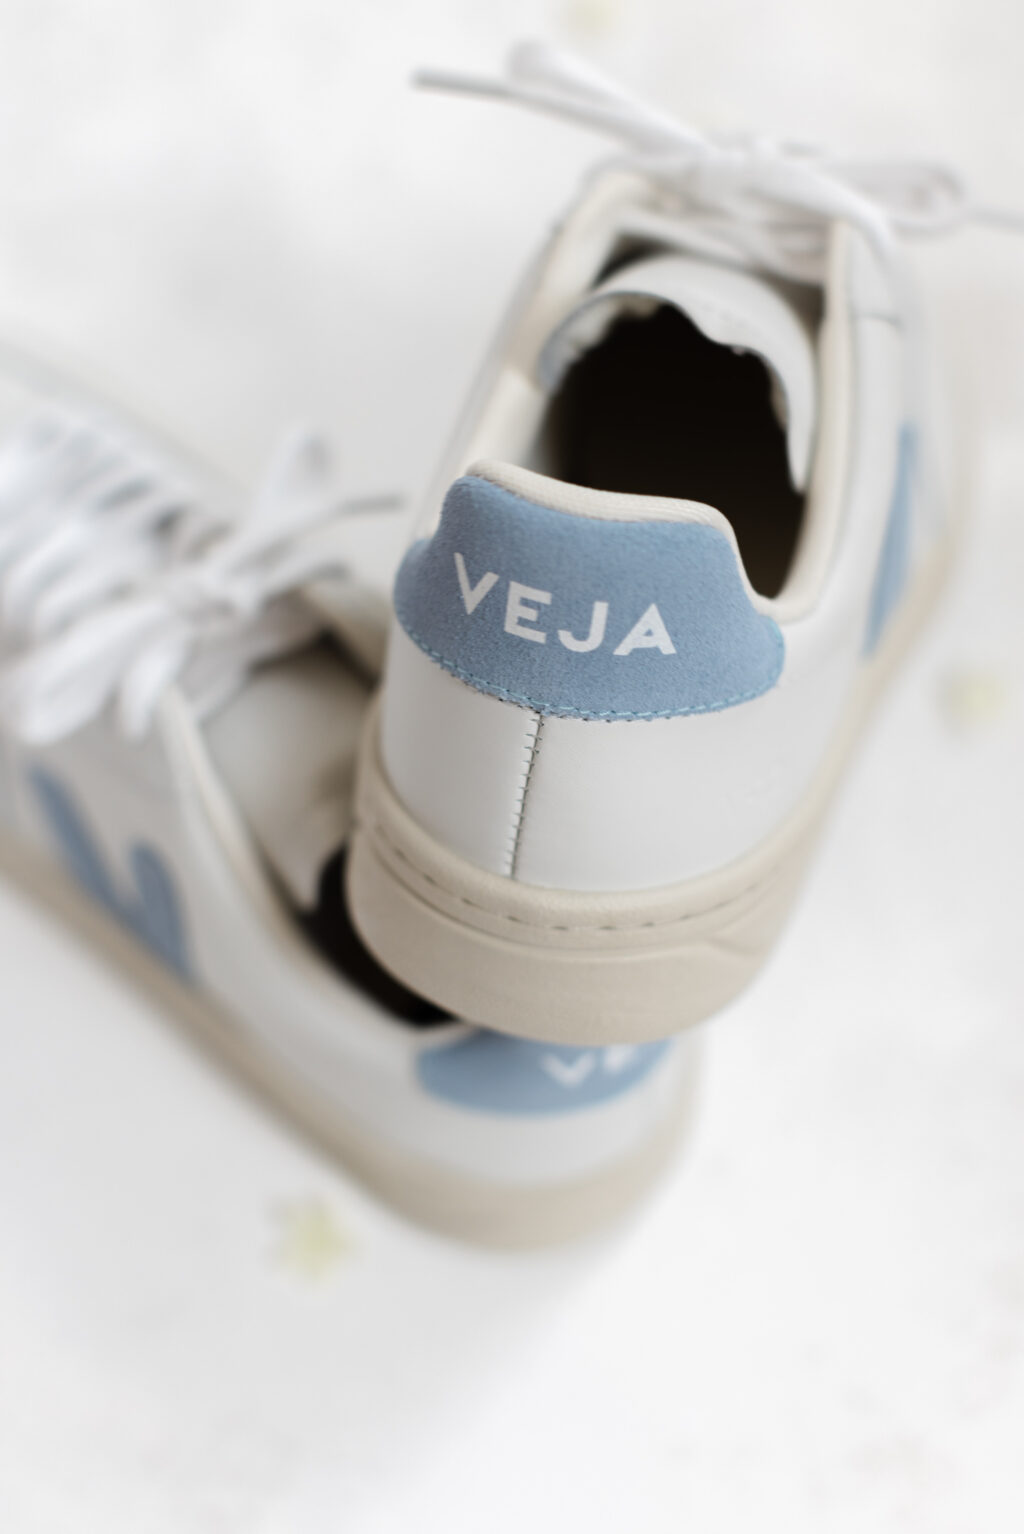 Something Blue Wedding Sneakers Shoe Ideas